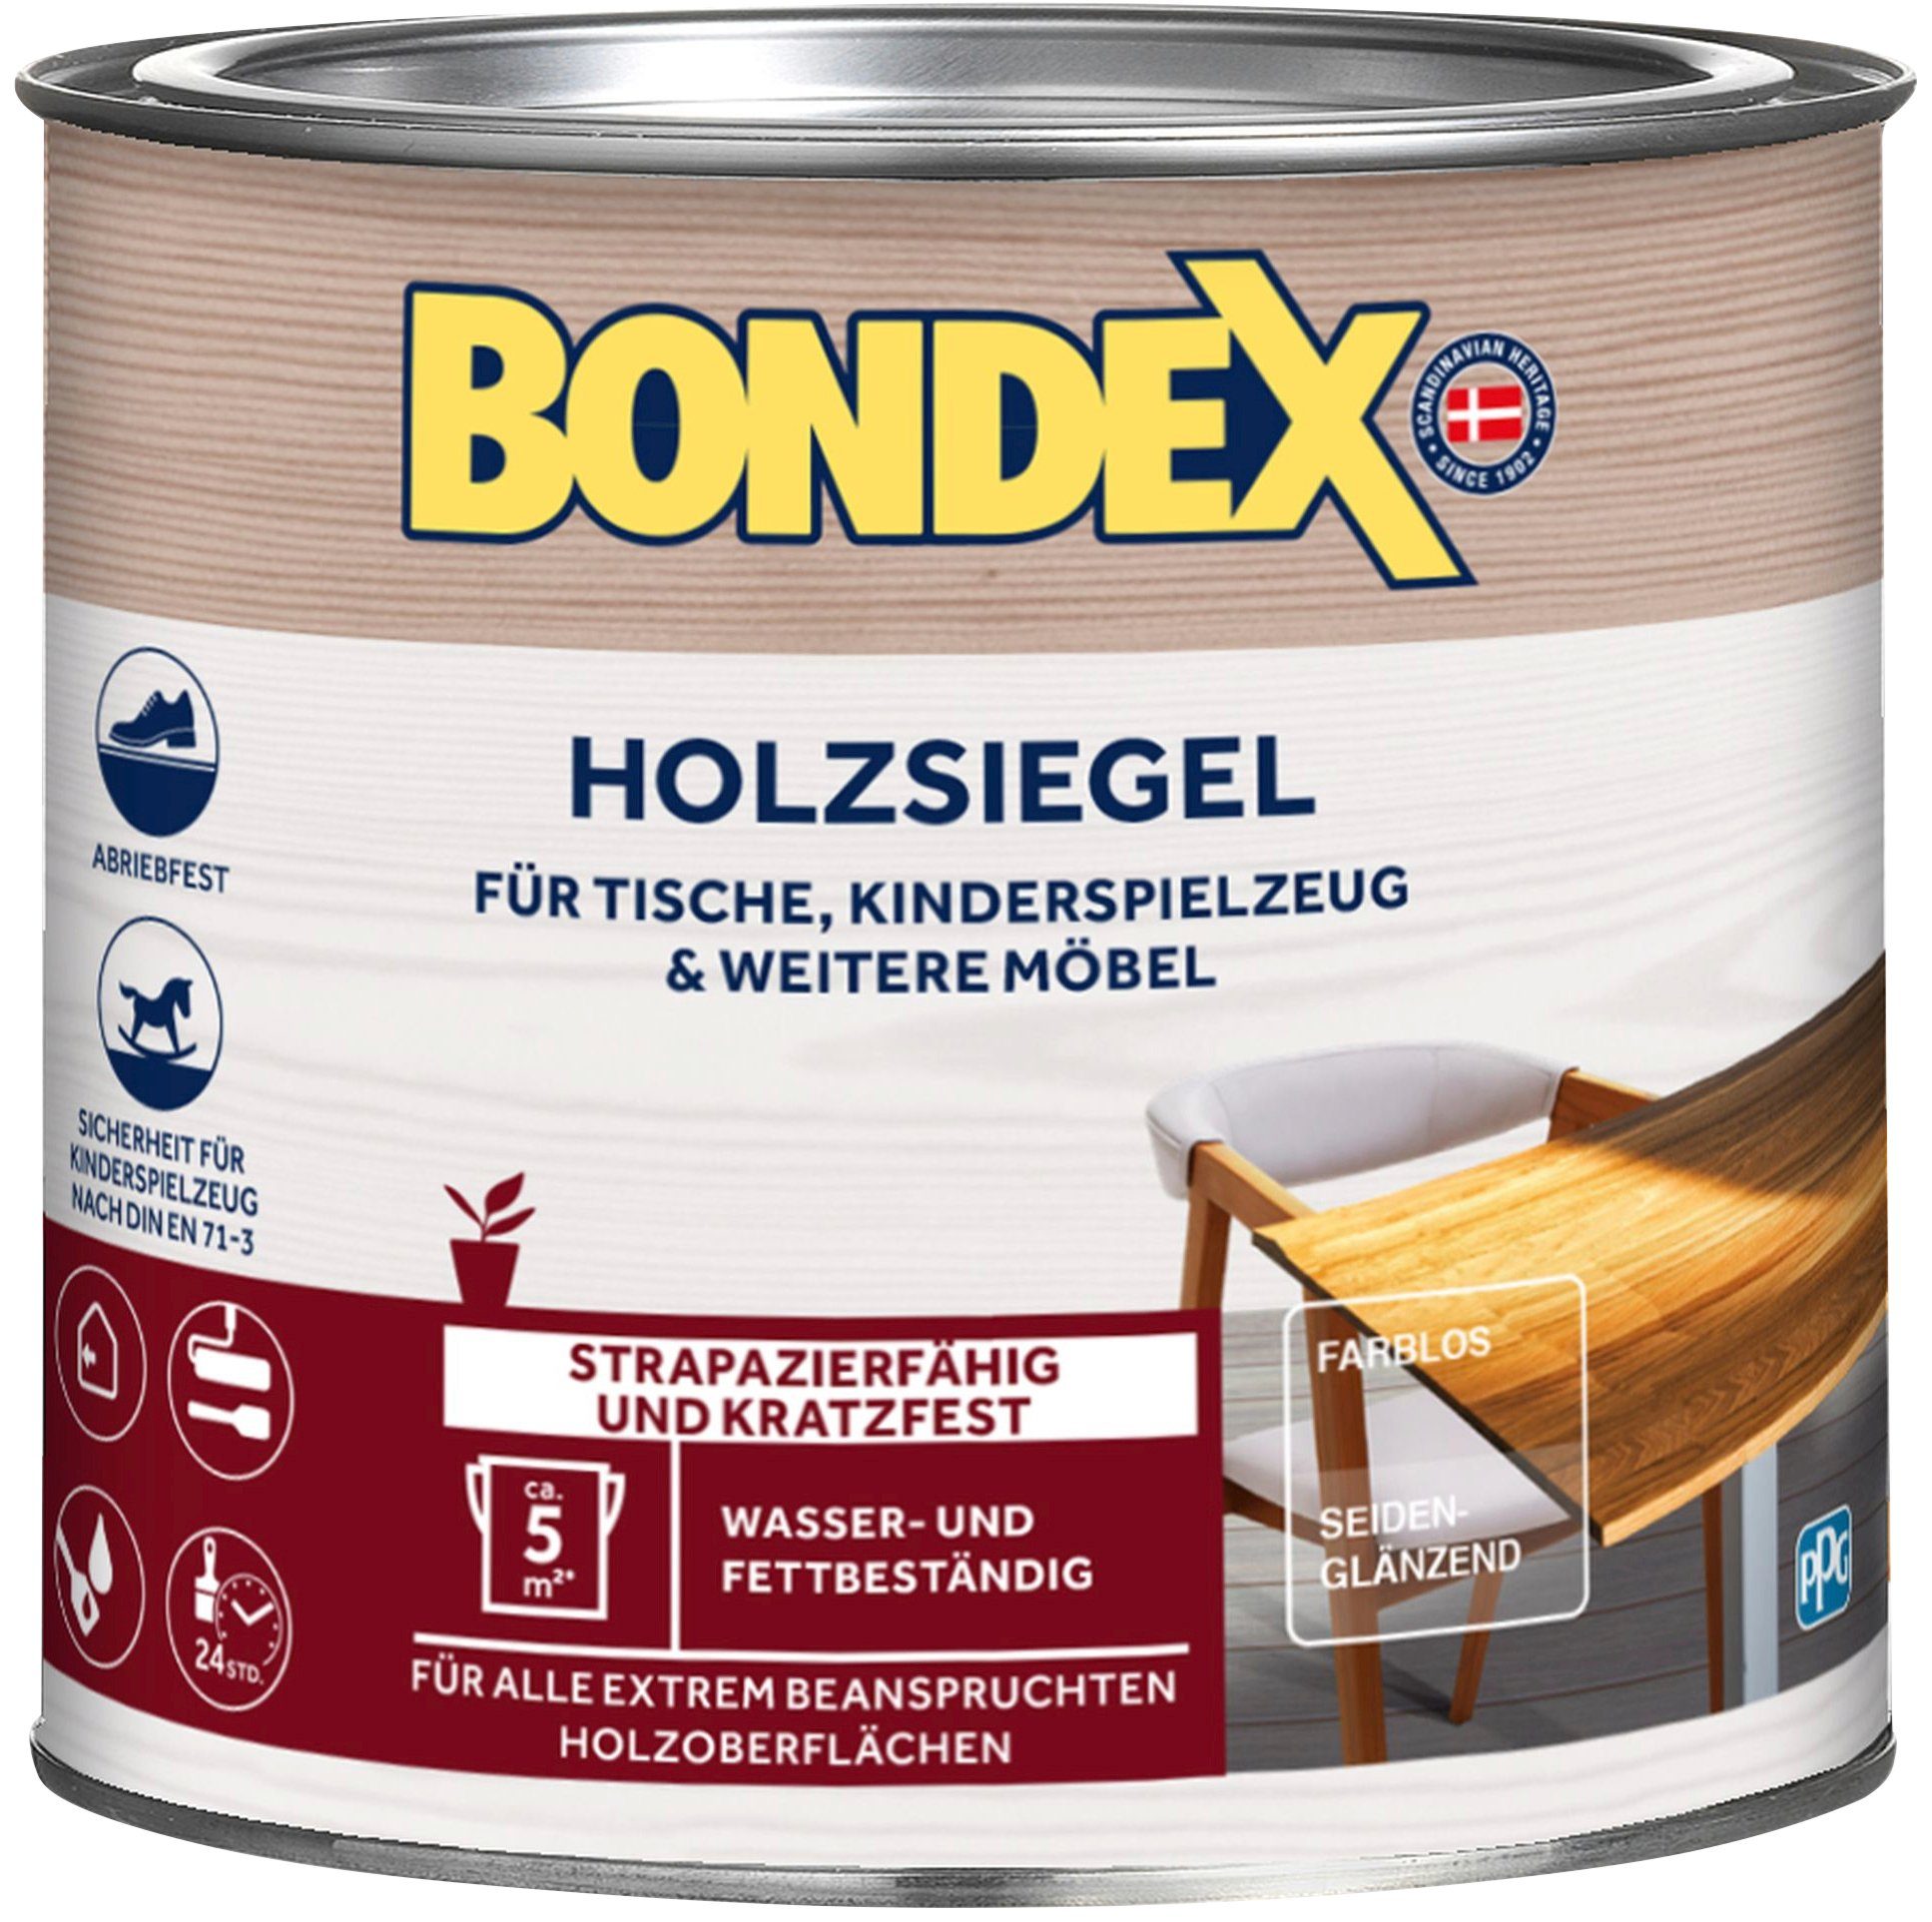 Das Produkt erfreut sich großer Beliebtheit Bondex Lasur HOLZSIEGEL, Farblos Liter Seidenglänzend 0,25 Farblos Matt, Inhalt / 